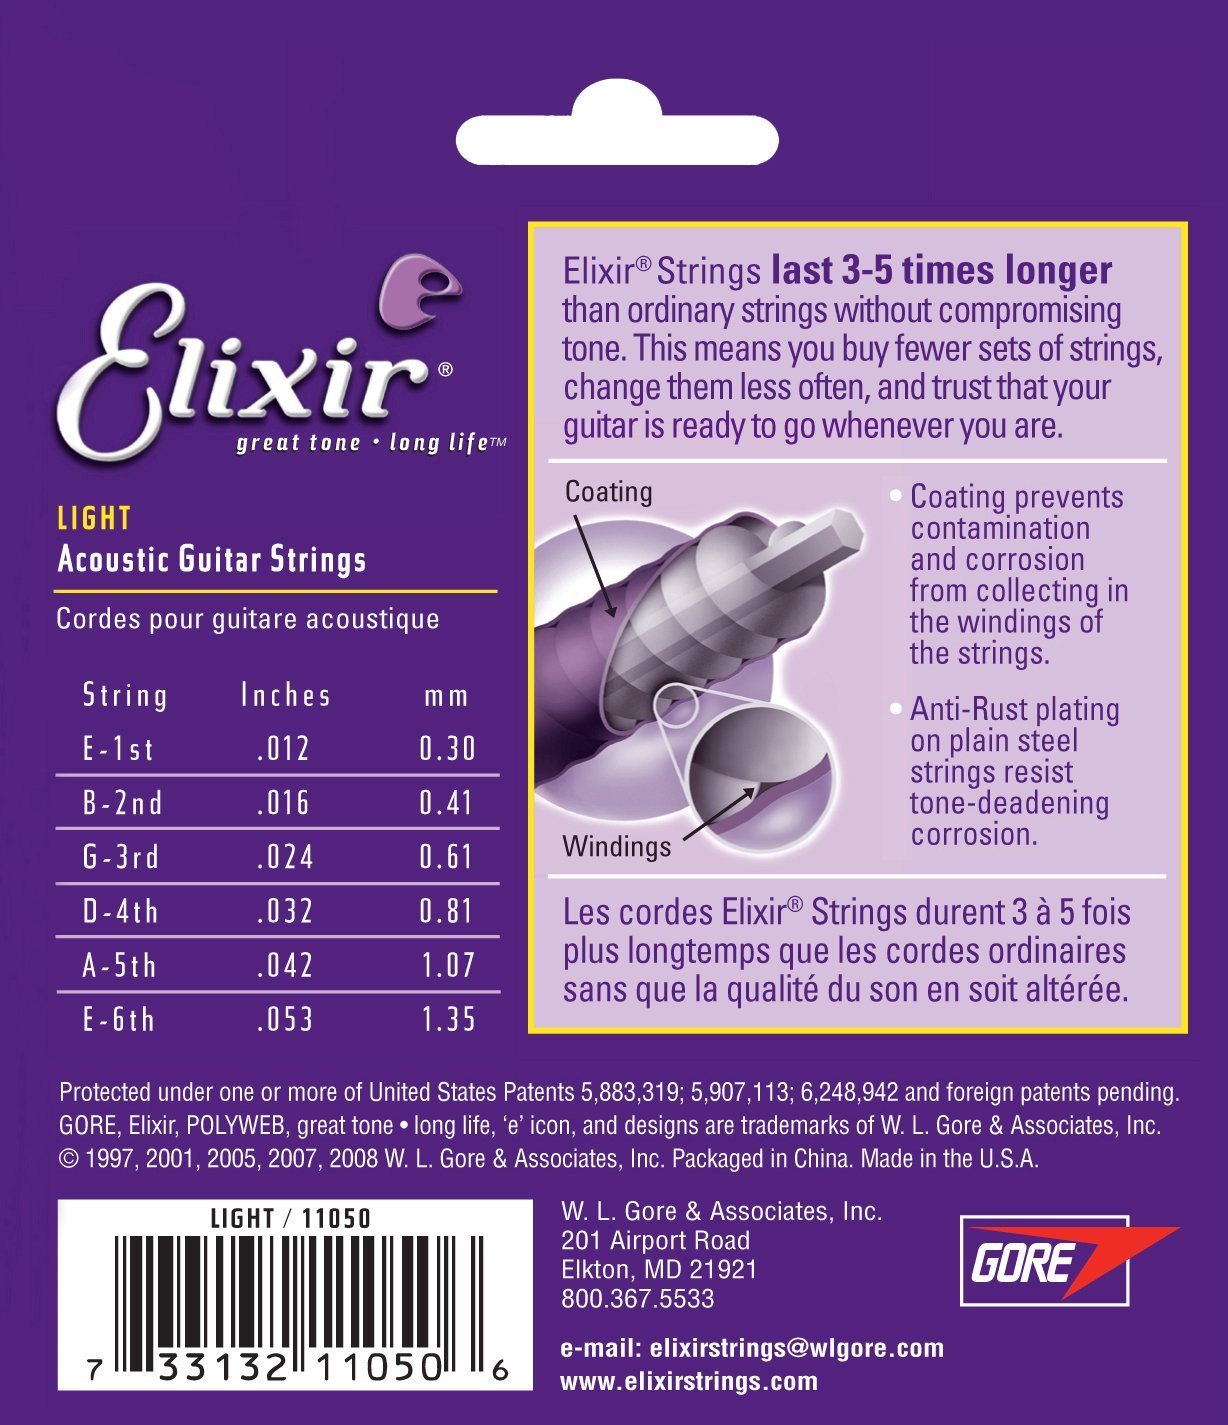 Elixir 11100 80/20 Bronze Acoustic Guitar Strings with POLYWEB Coating, Medium (.013-.056)